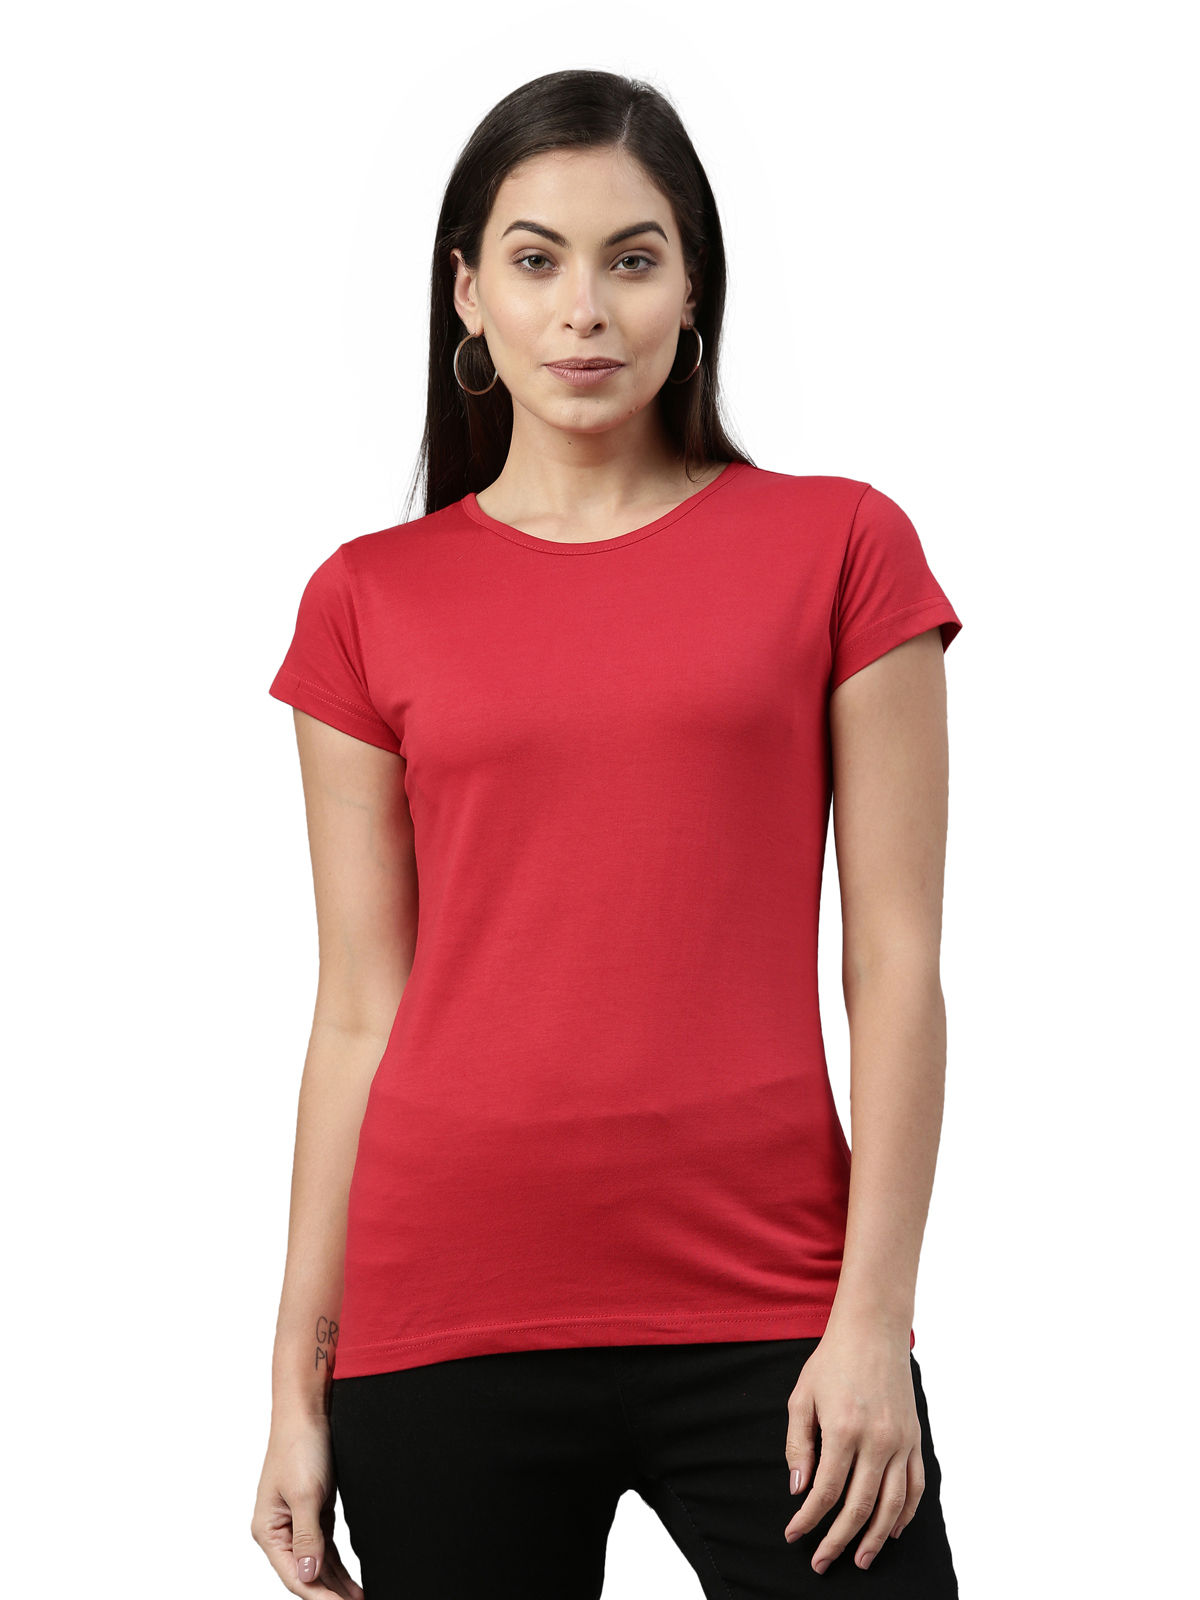 WOMEN FASHION Shirts & T-shirts Crochet NoName blouse Red M discount 85% 